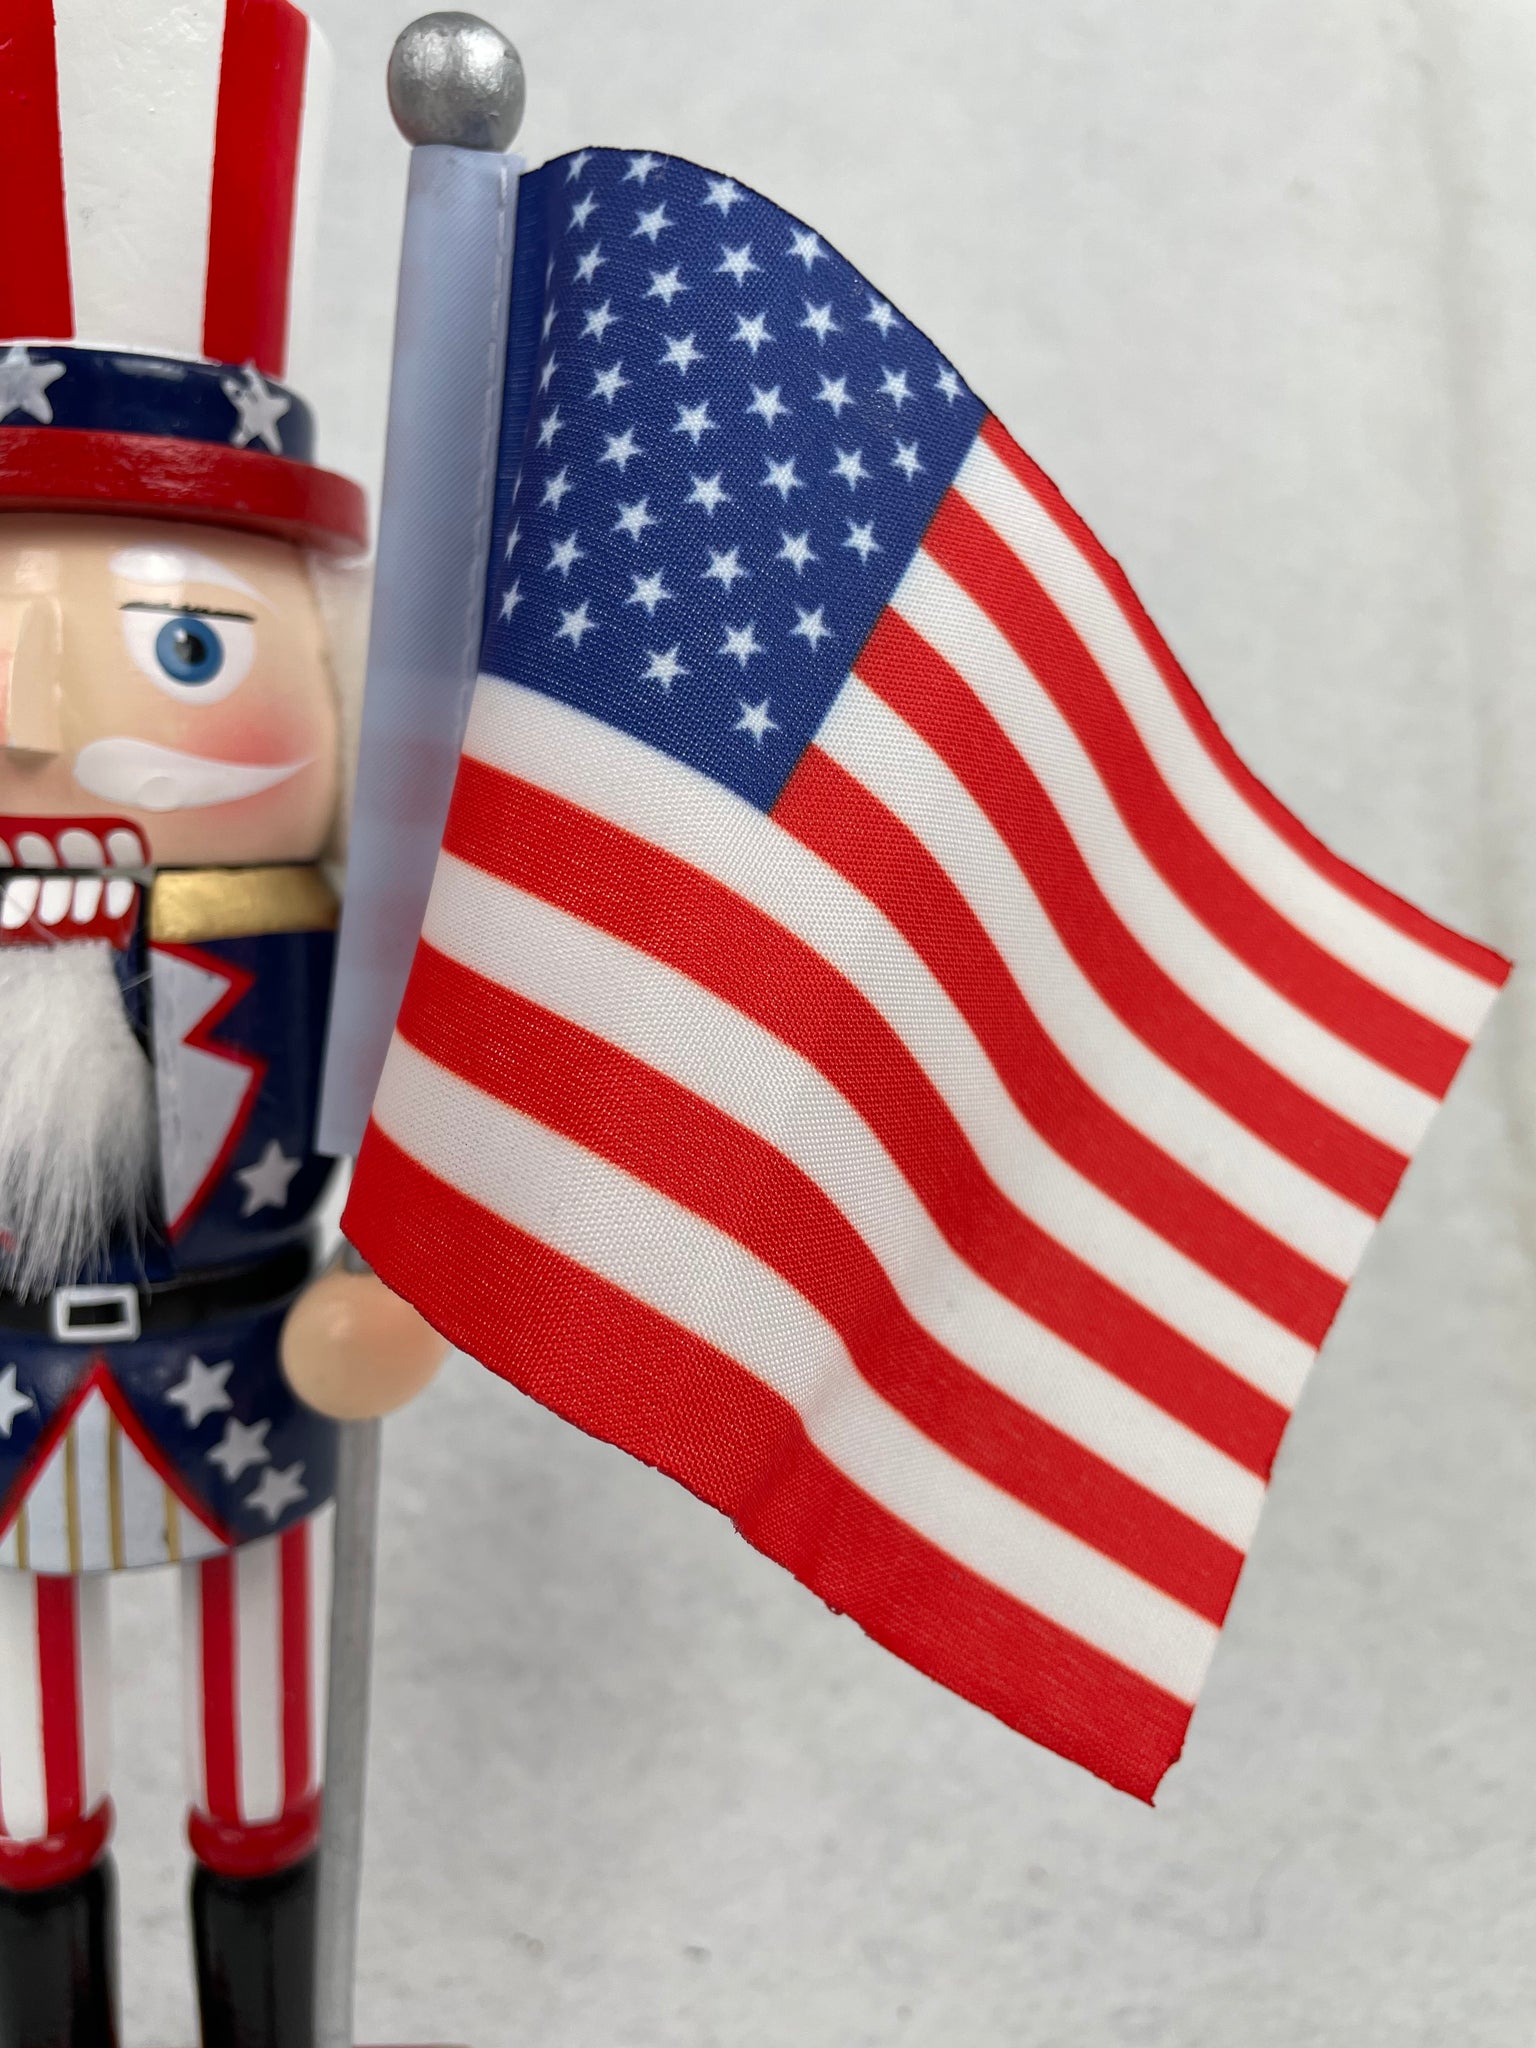 UNCLE SAM NUTCRACKER VILLAGE 10TH ANNIVERSARY JULY 4TH NEW IN BOX American  Flag